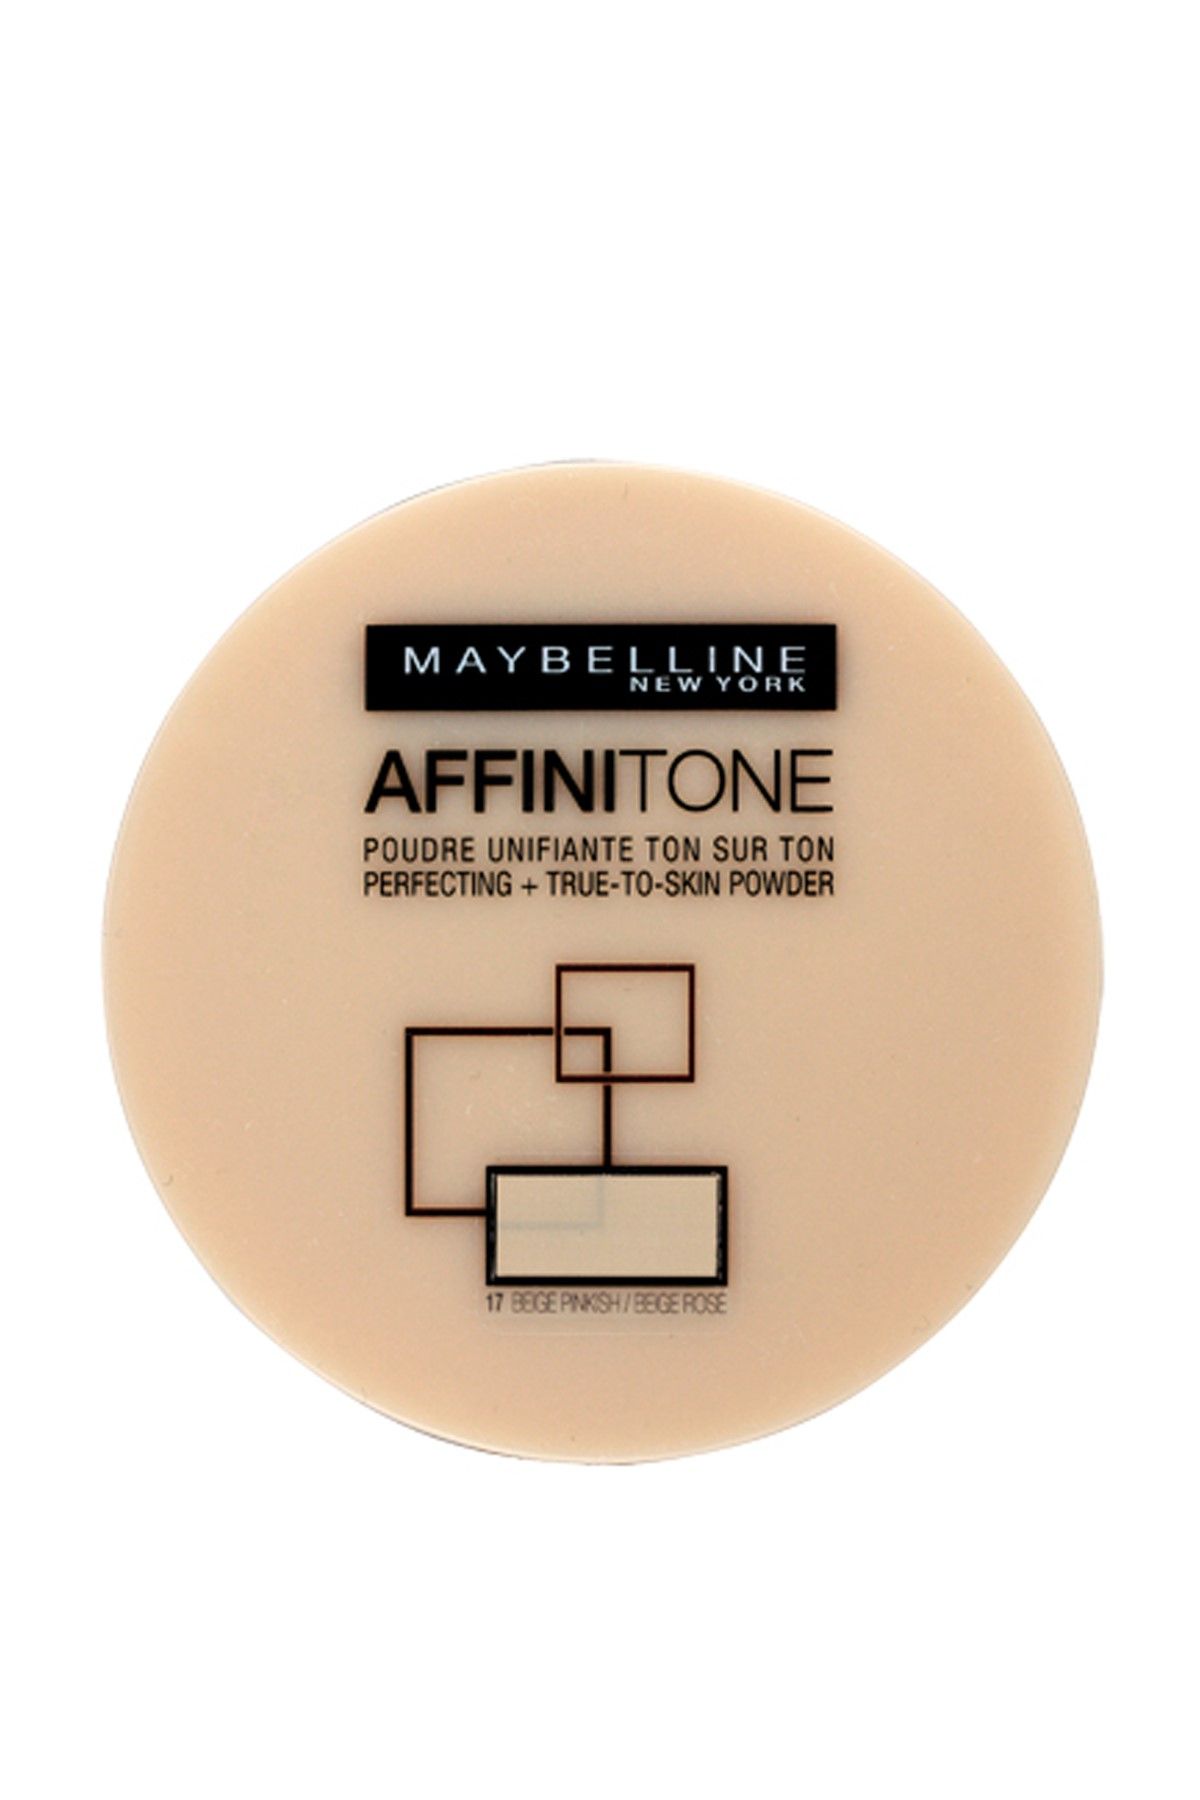 Maybelline New York پنکک و پودر آرایشی Affinitone Powder کاملا سبک و پوشش طبیعی شماره 17